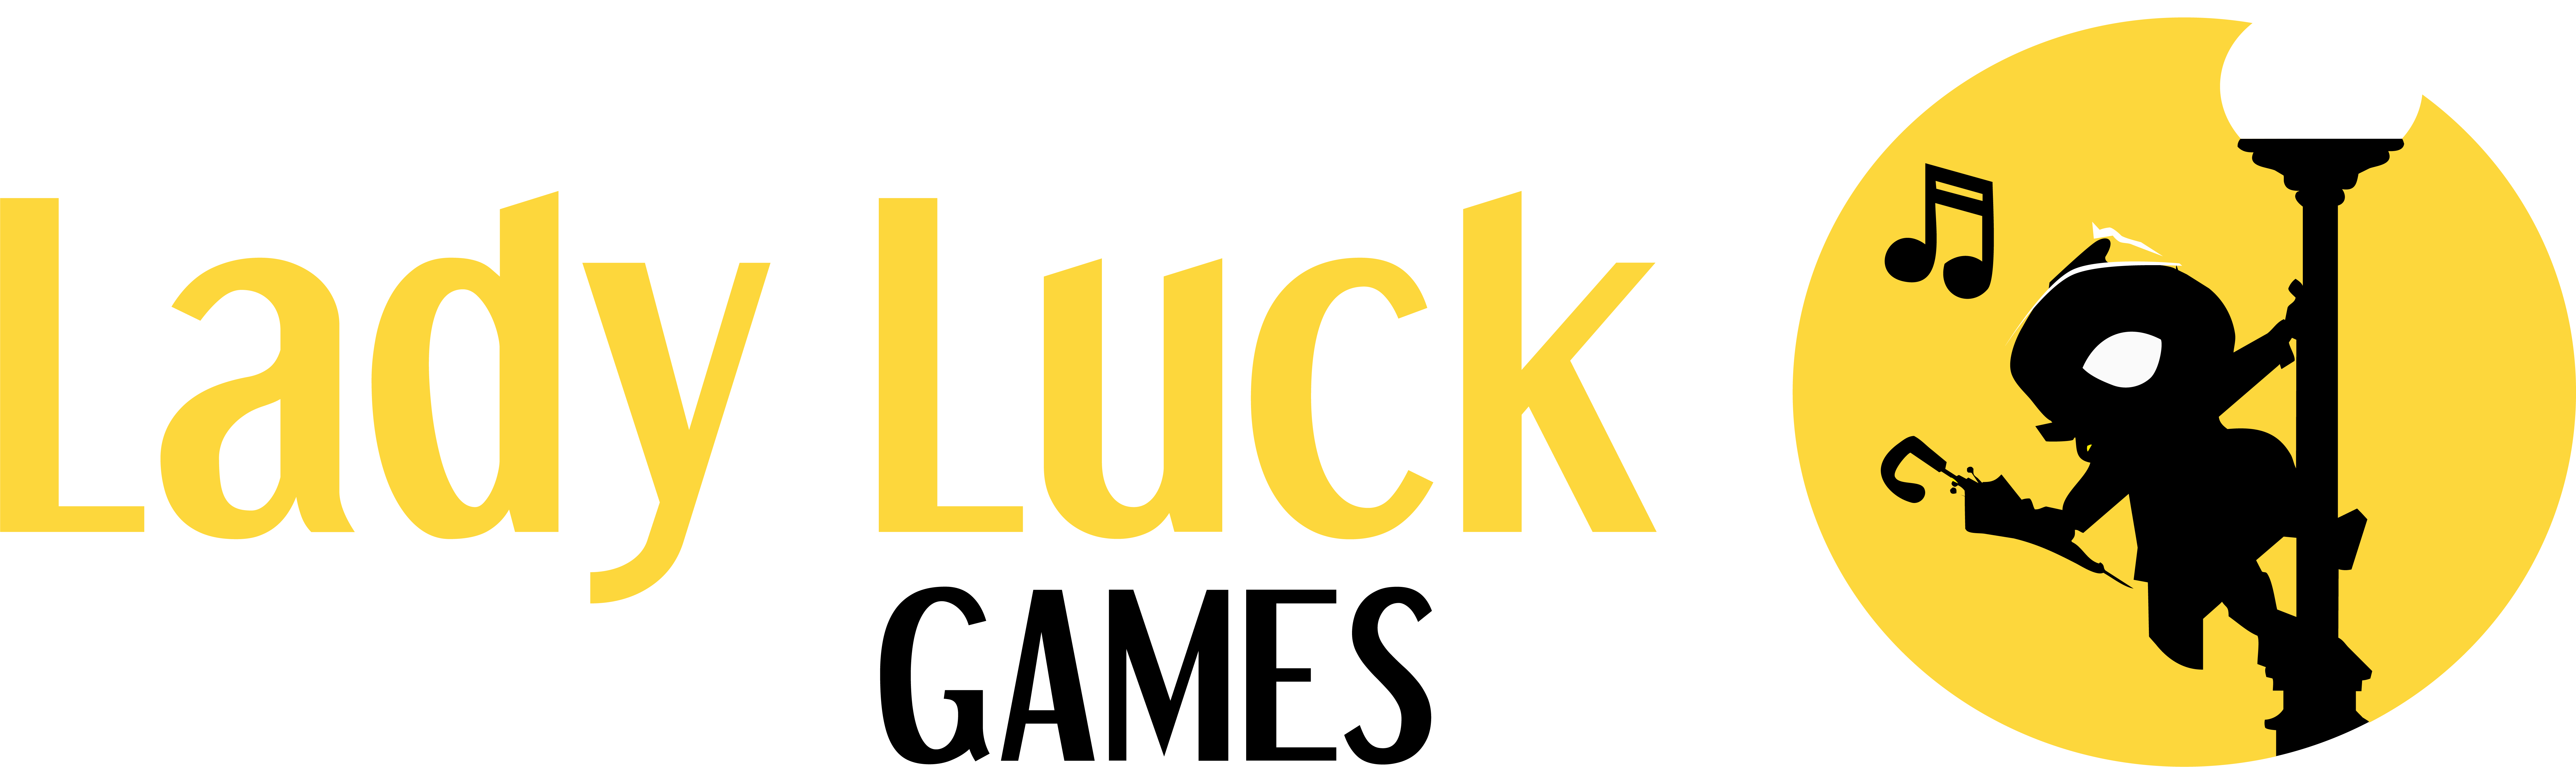 Lady Luck Games giochi